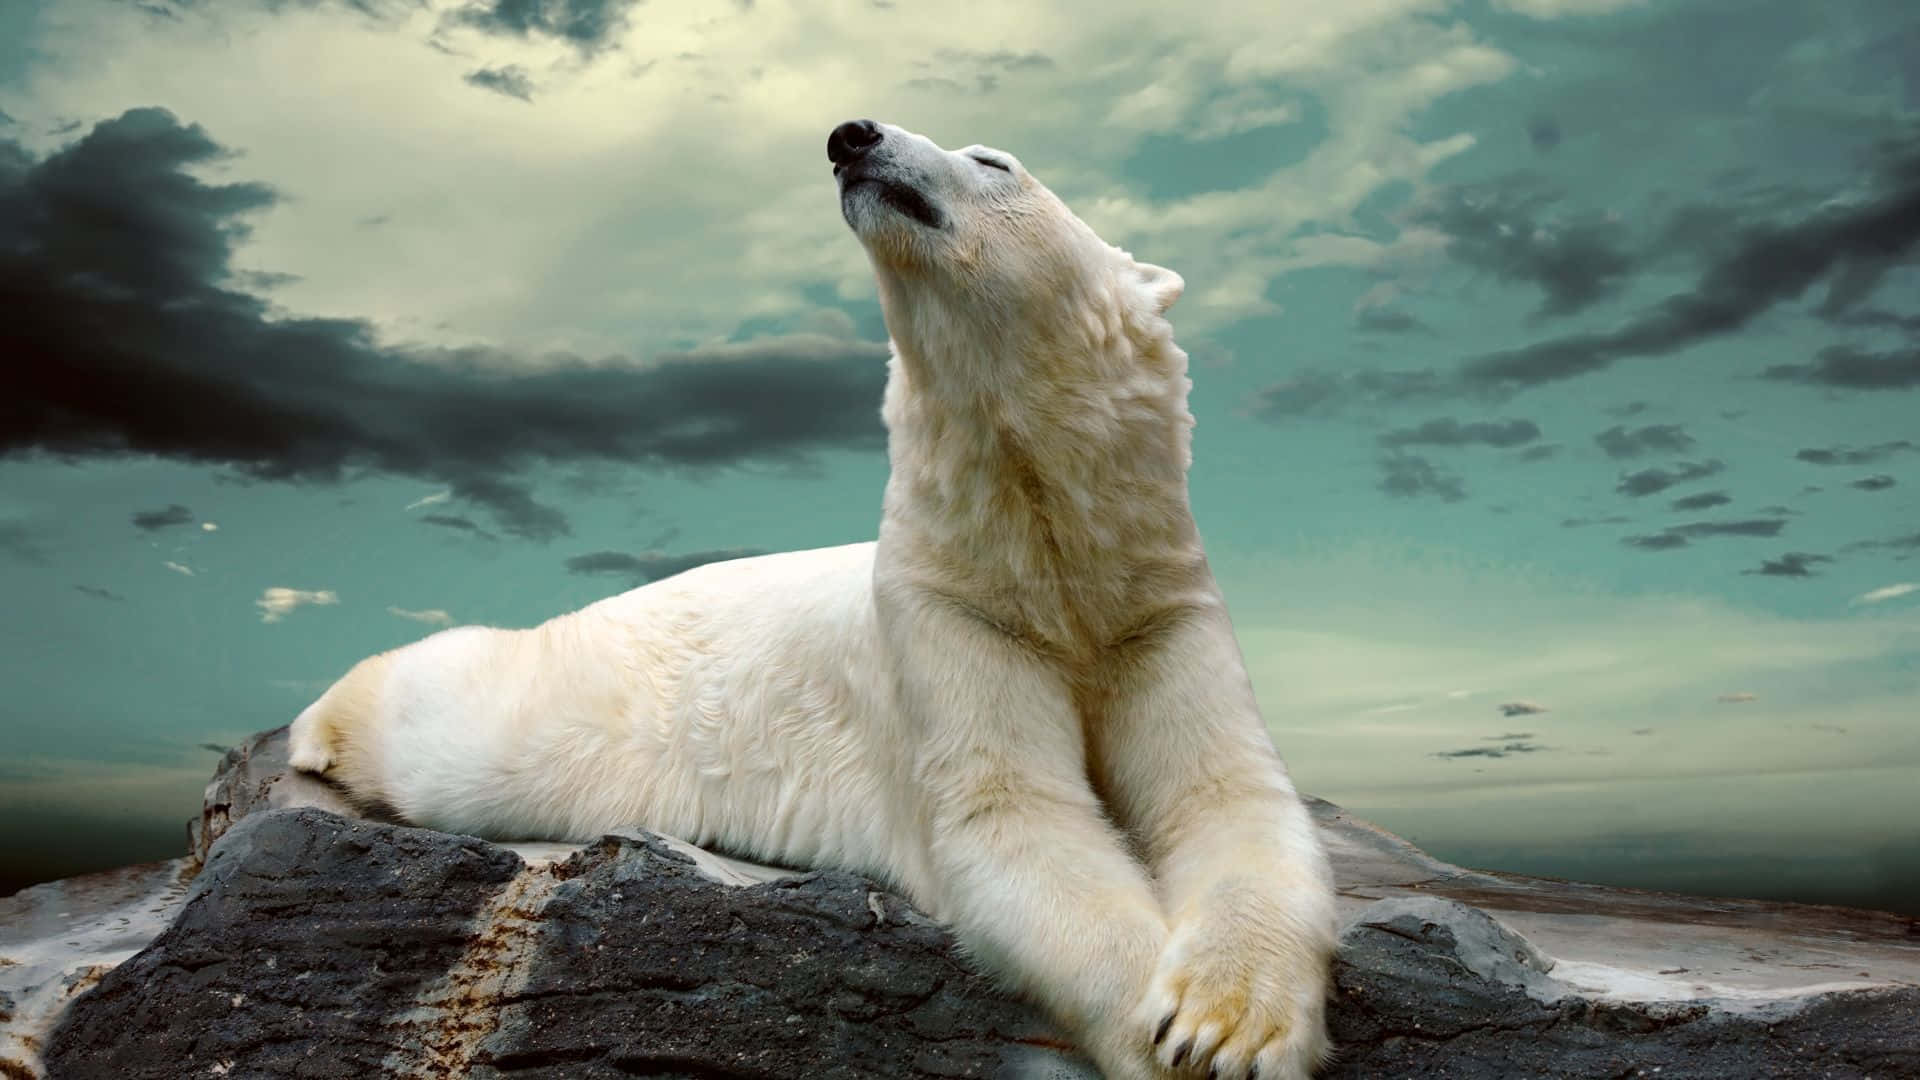 Omajestoso Urso Polar Branco Em Seu Habitat Natural.